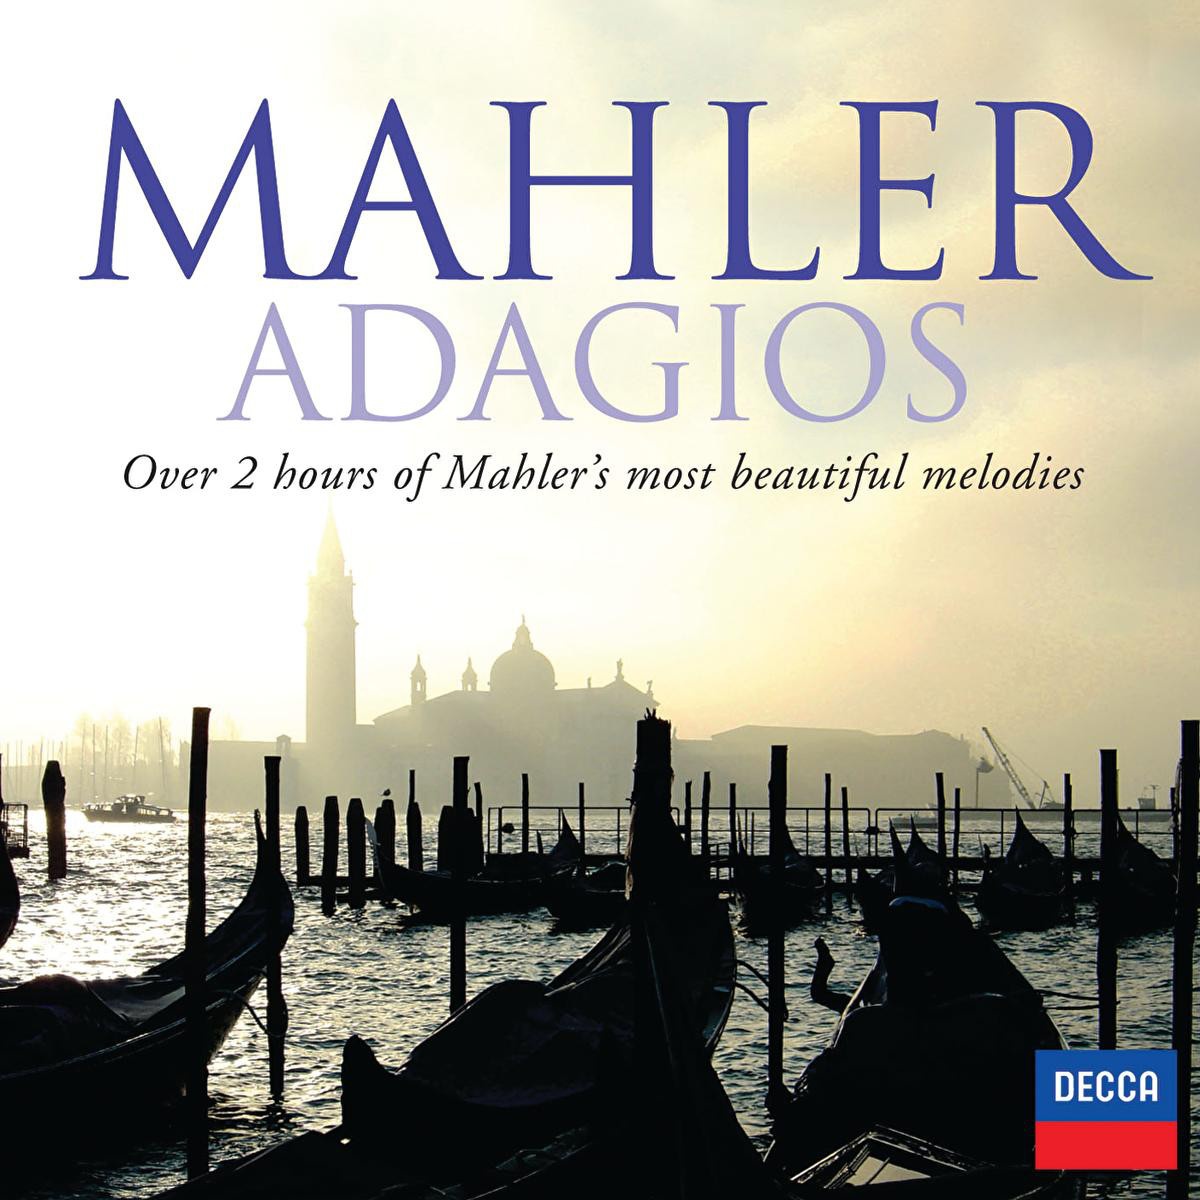 Mahler: Symphony No.4 in G - 3. Ruhevoll (Poco adagio)